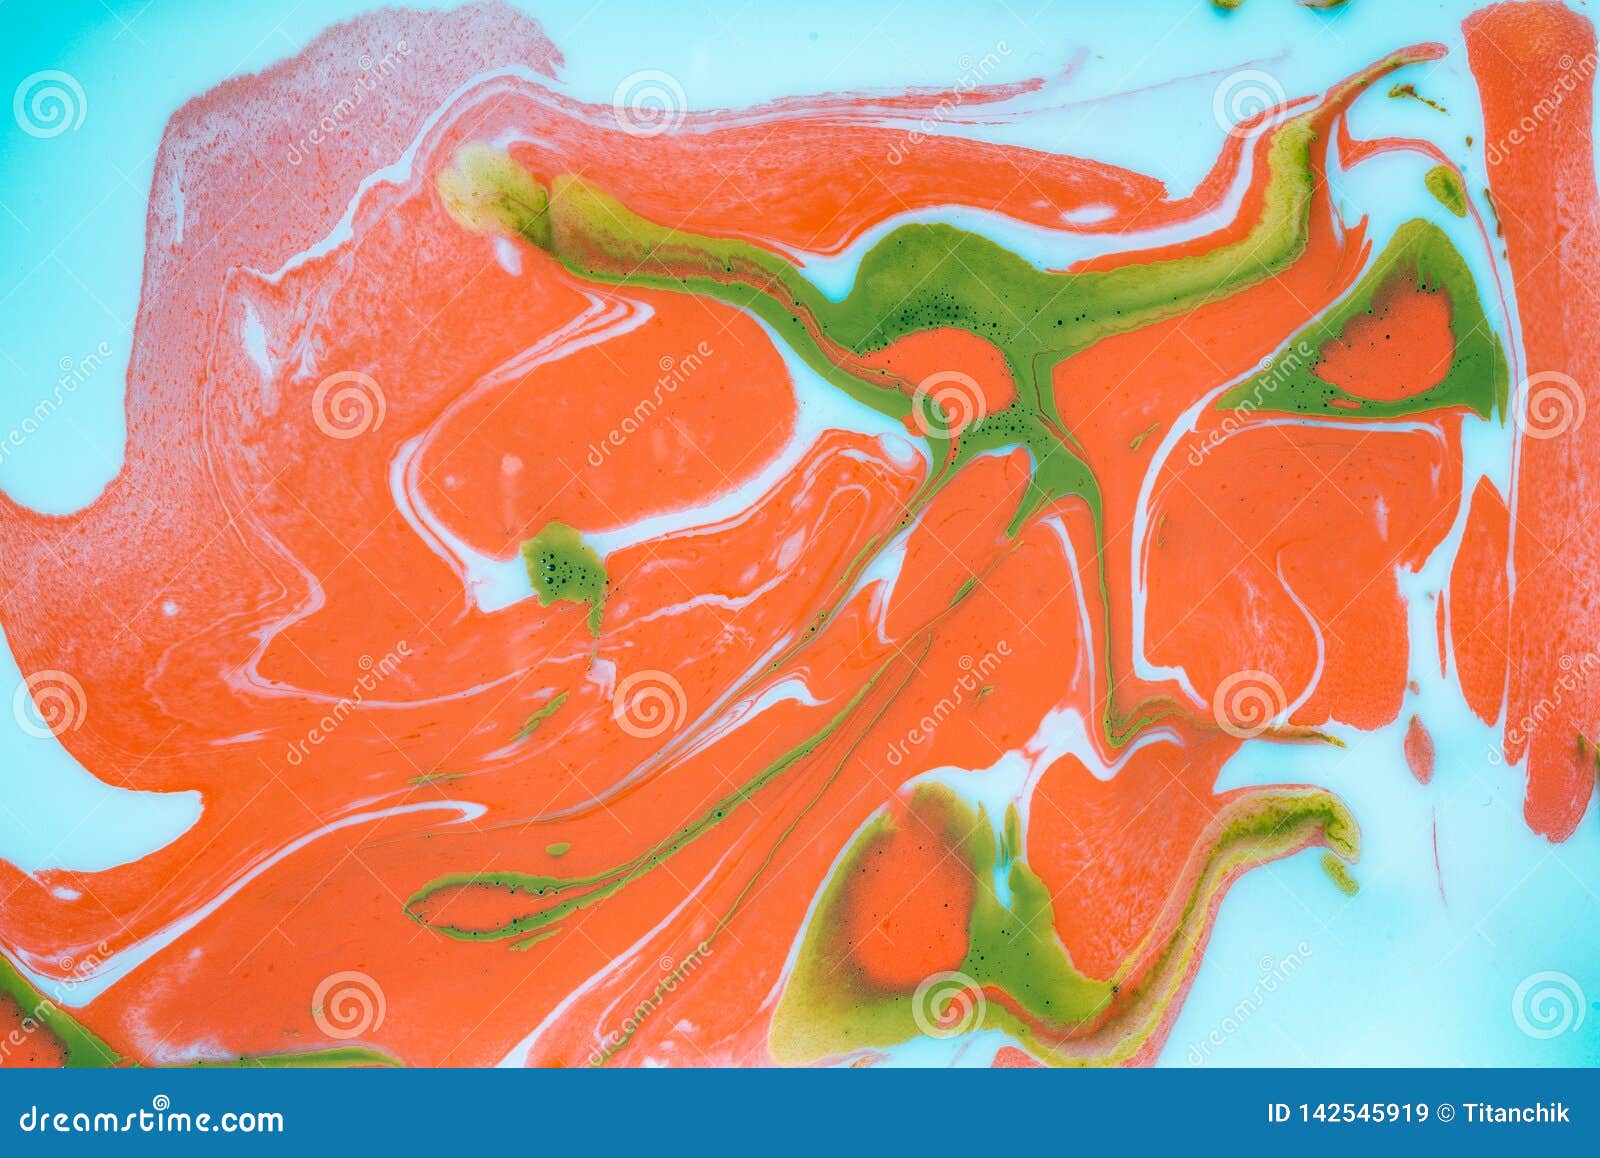 Acrylic Liquid- Mixed Fluid Paints Art Work Stock Image - Image of ...